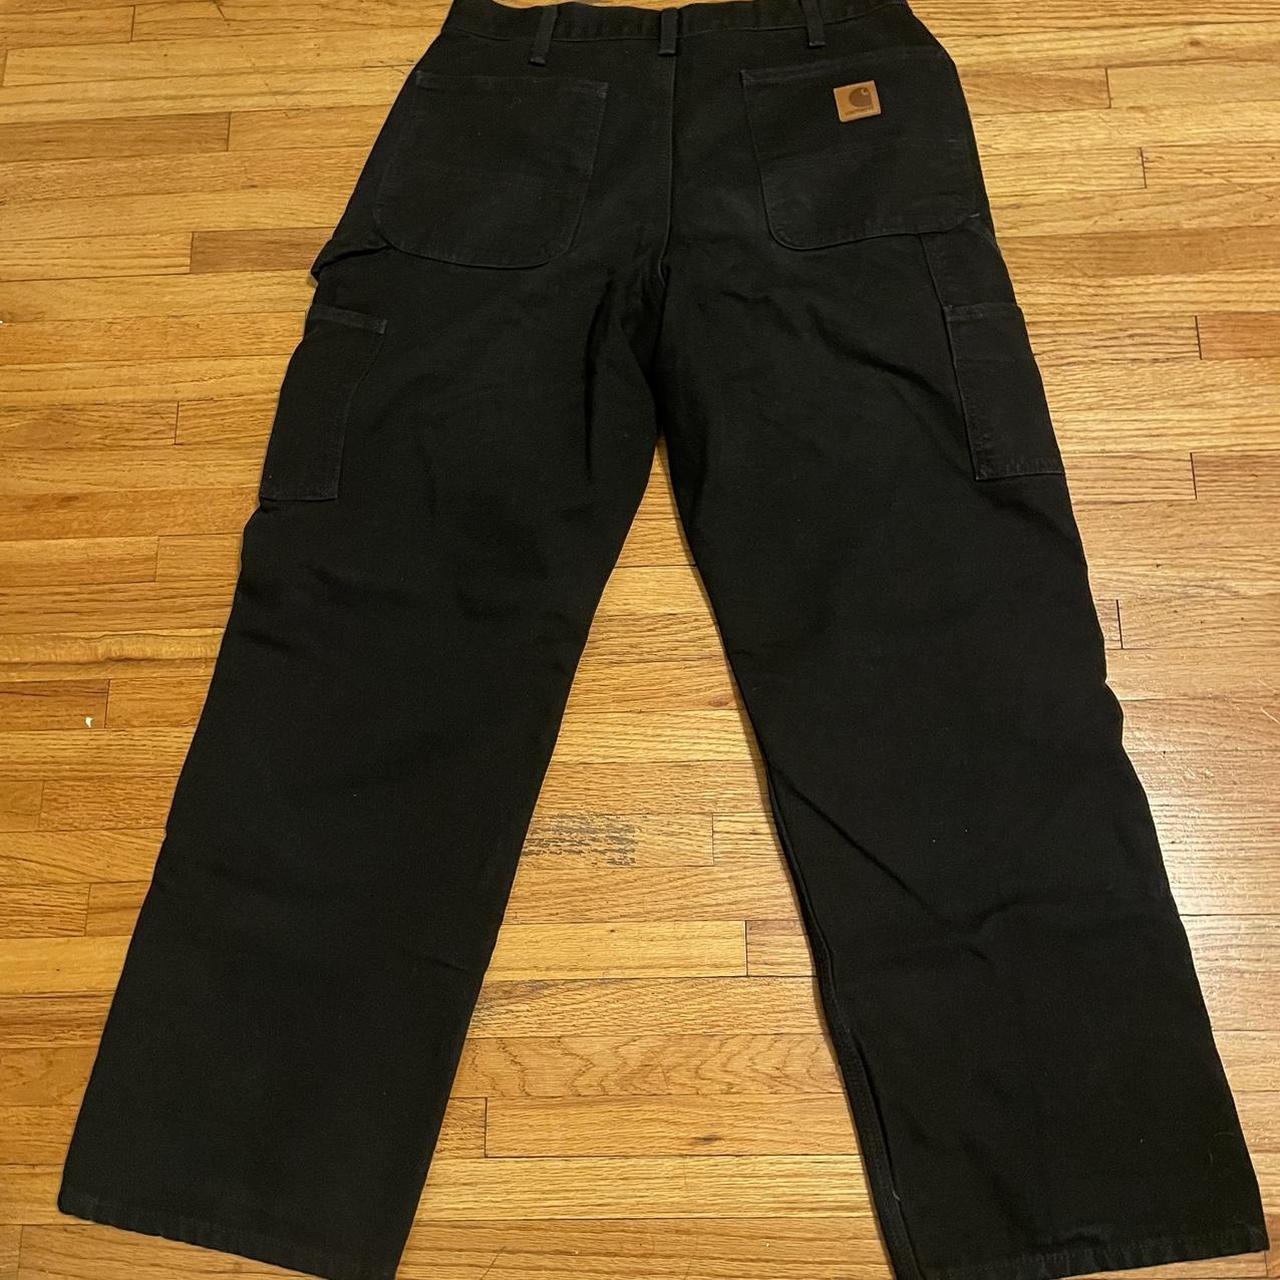 33x30 black vintage carharrt pants great condition.... - Depop